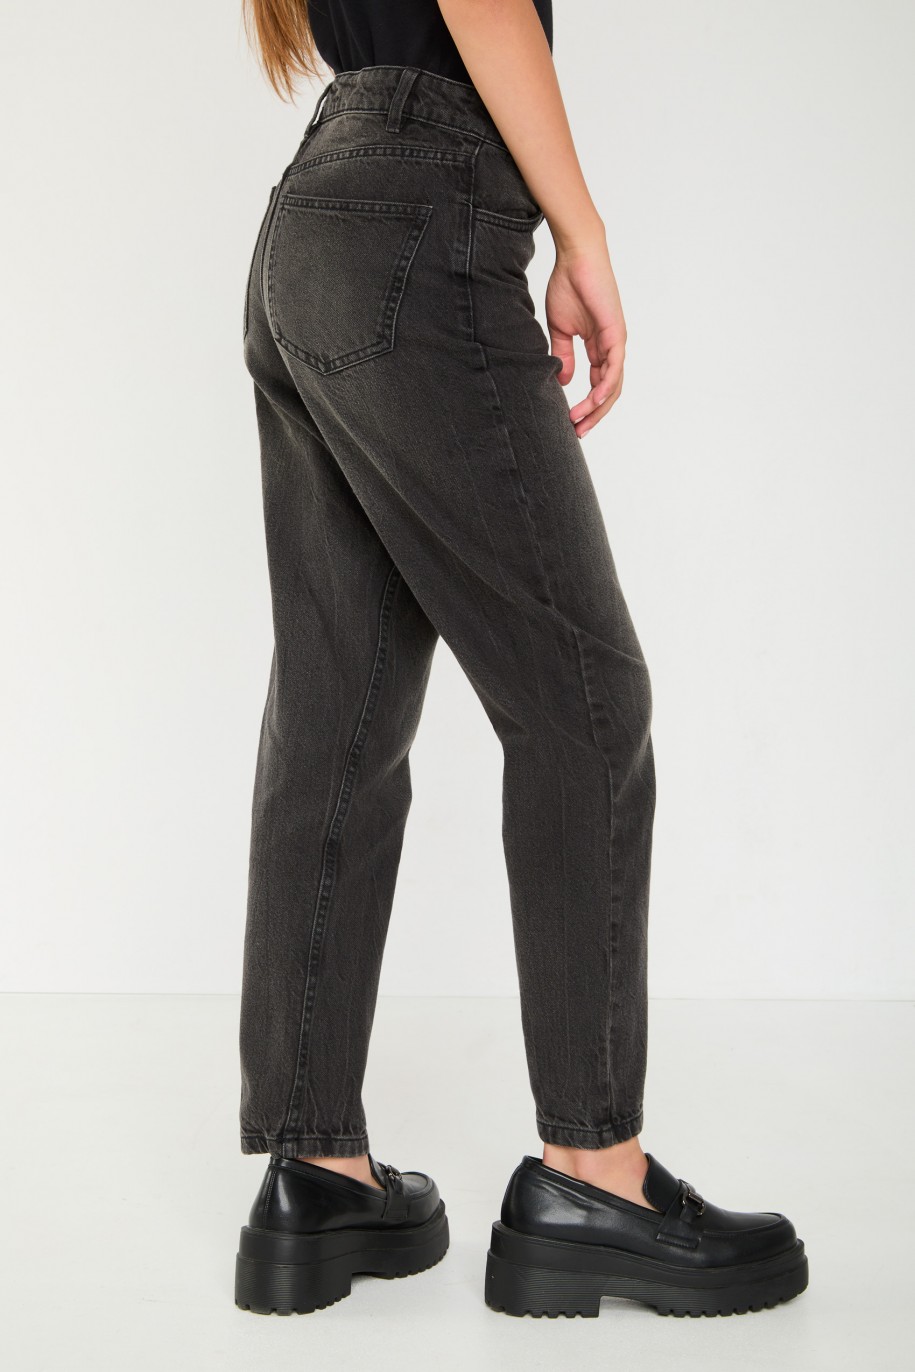 Szare jeansy typu MOM FIT - 43967